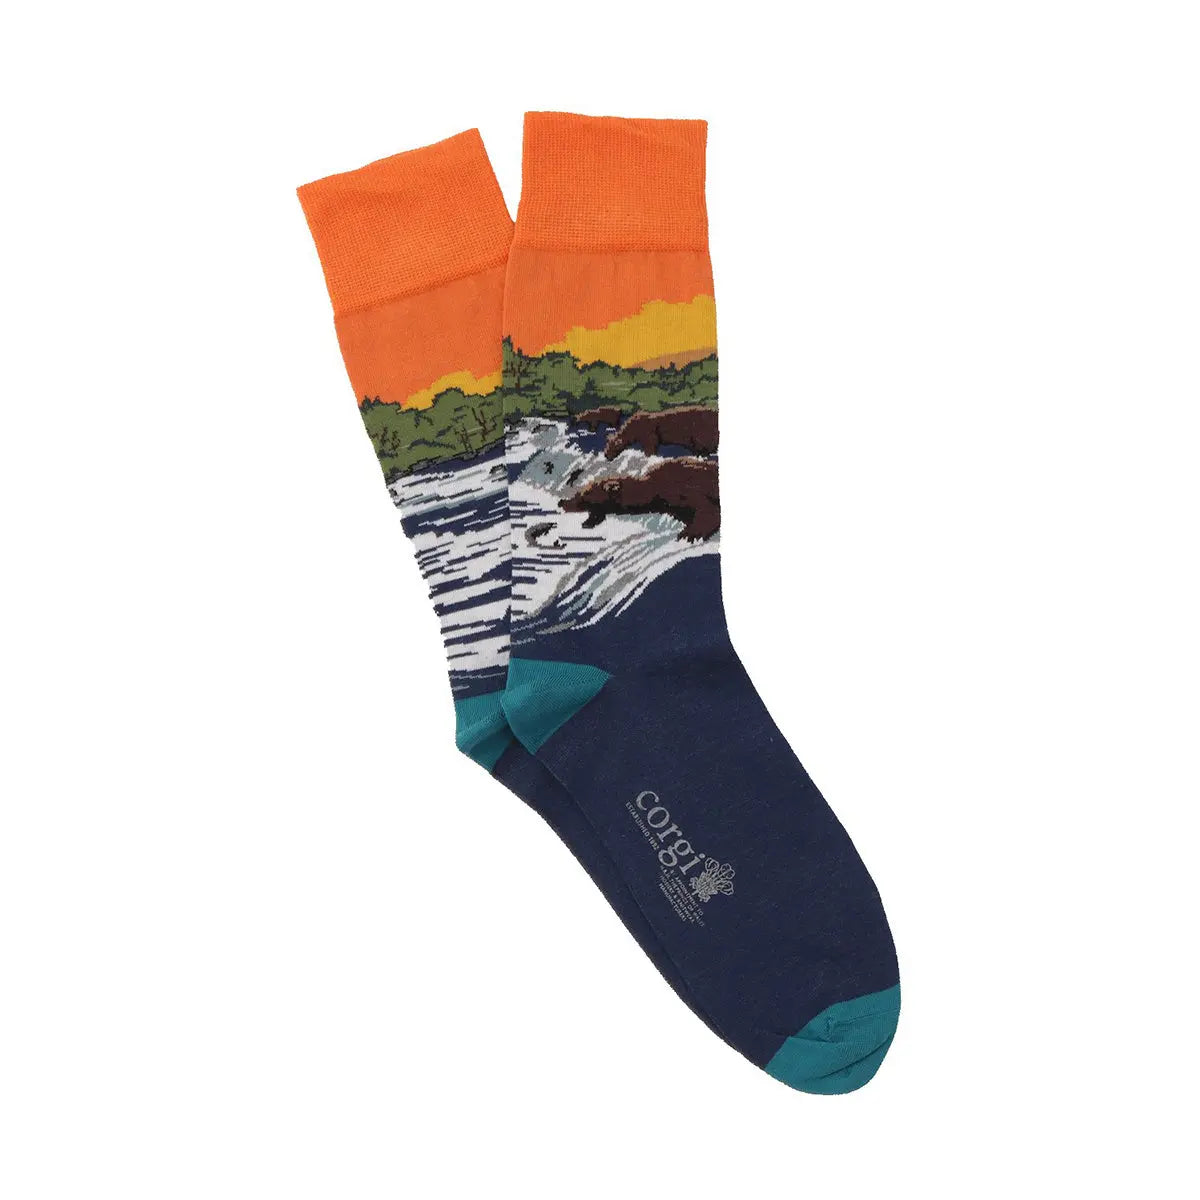 ‘Bears at River’ Premium Cotton Socks  Robert Old   